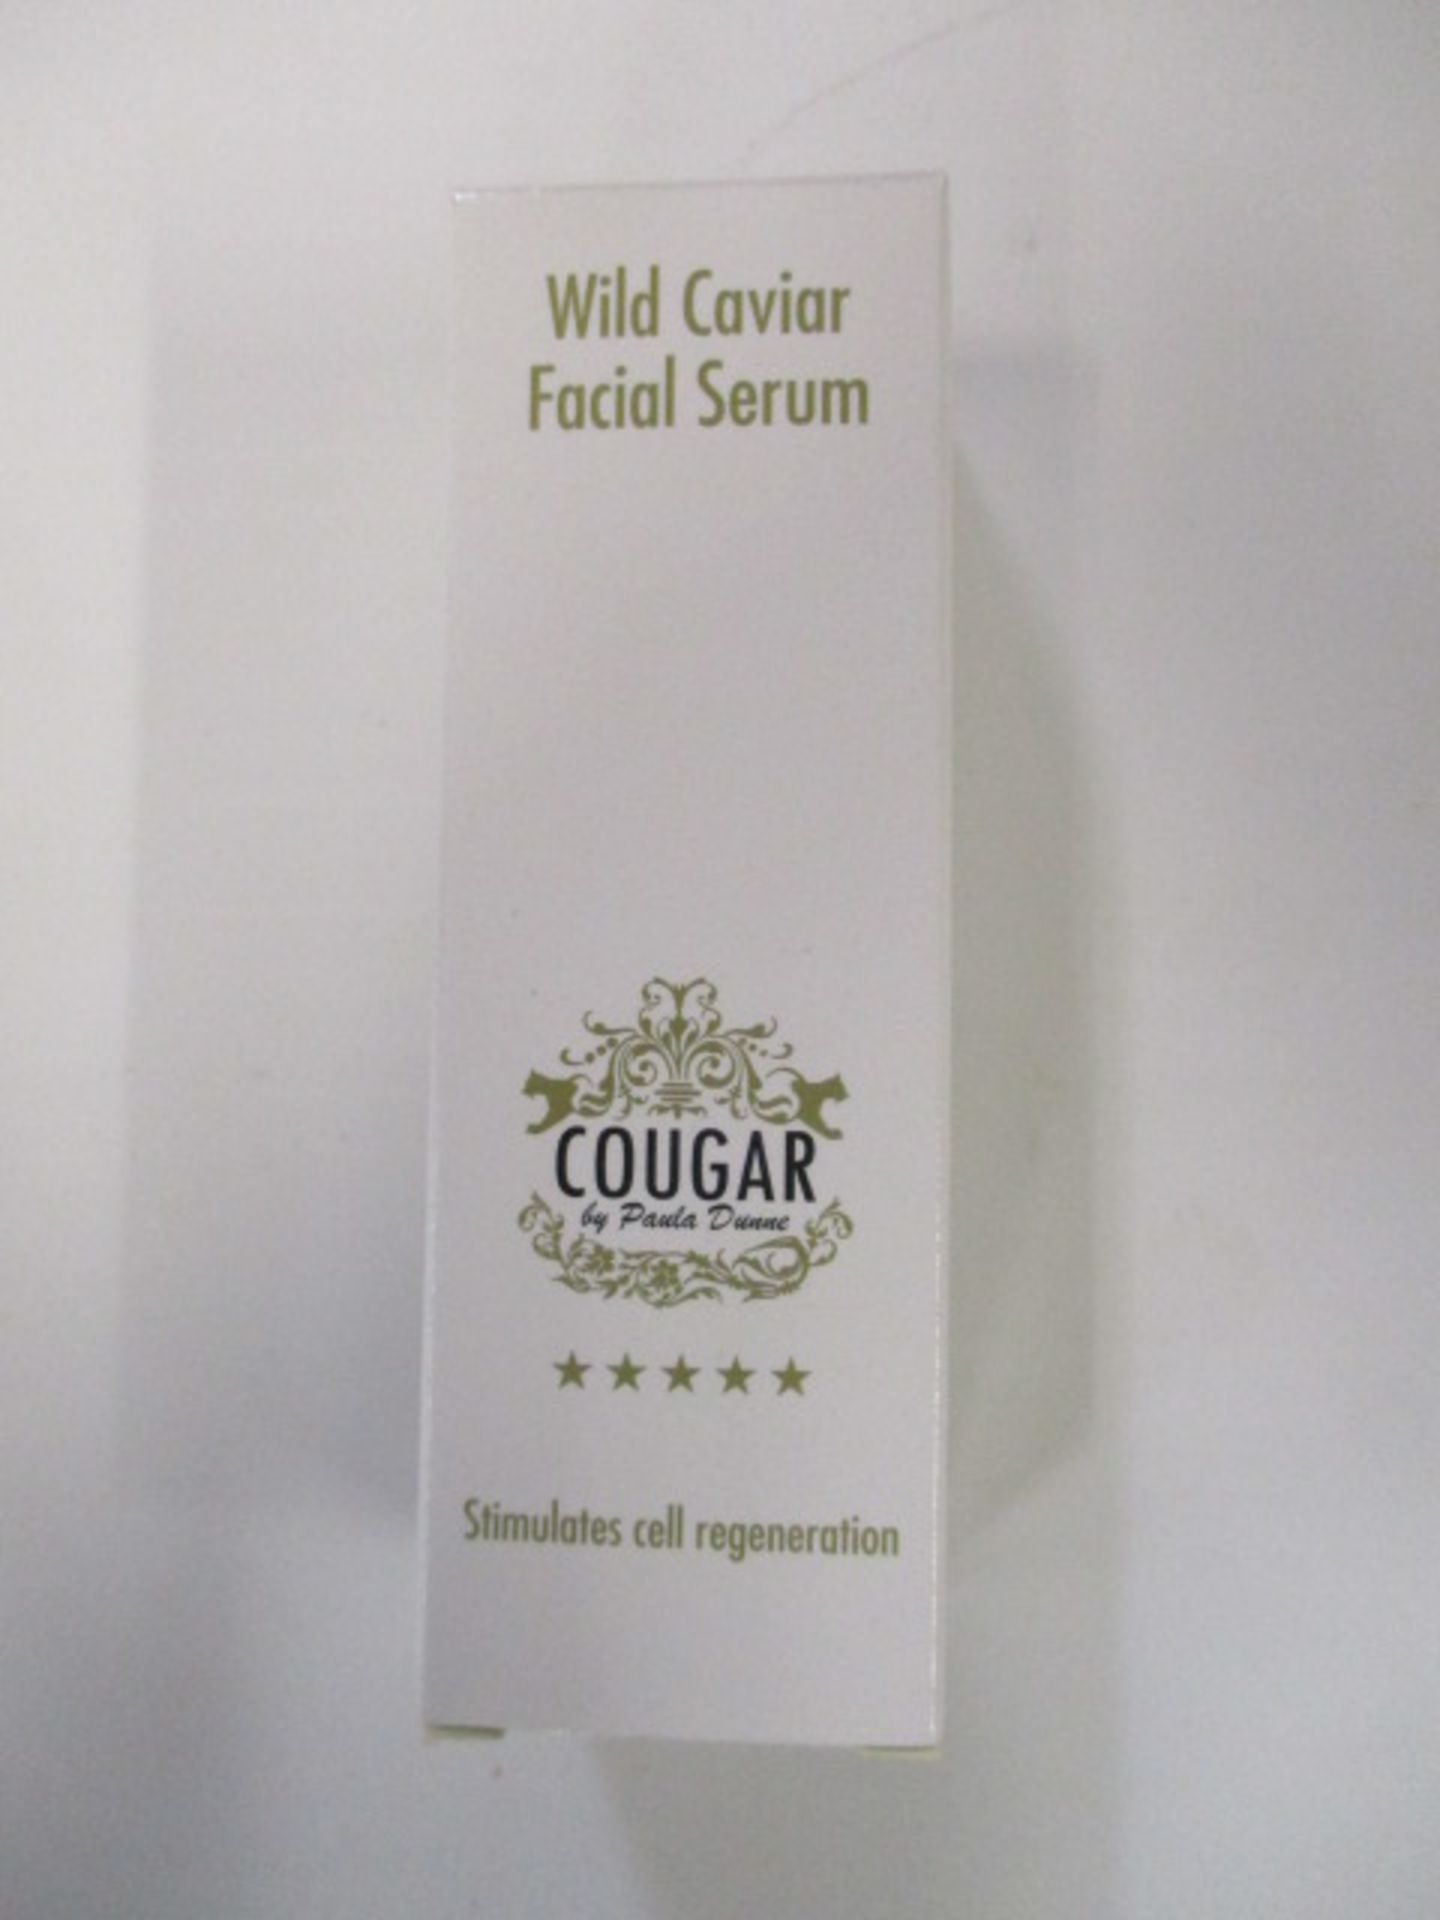 Cougar by Paula Dunne Caviar Facial Serum 50ml new & packaged RRP £20. The Wild Caviar range